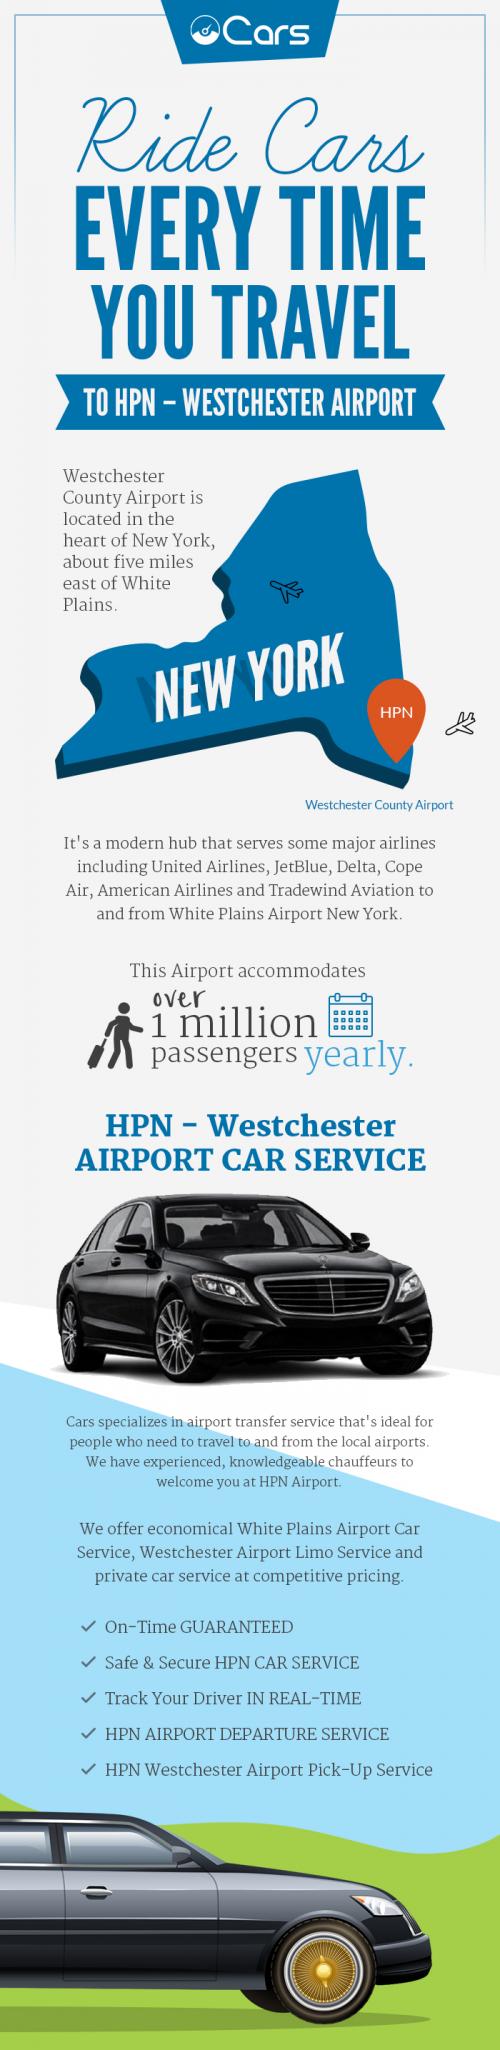 Cars - Safe & Secure HPN Airport Car Service